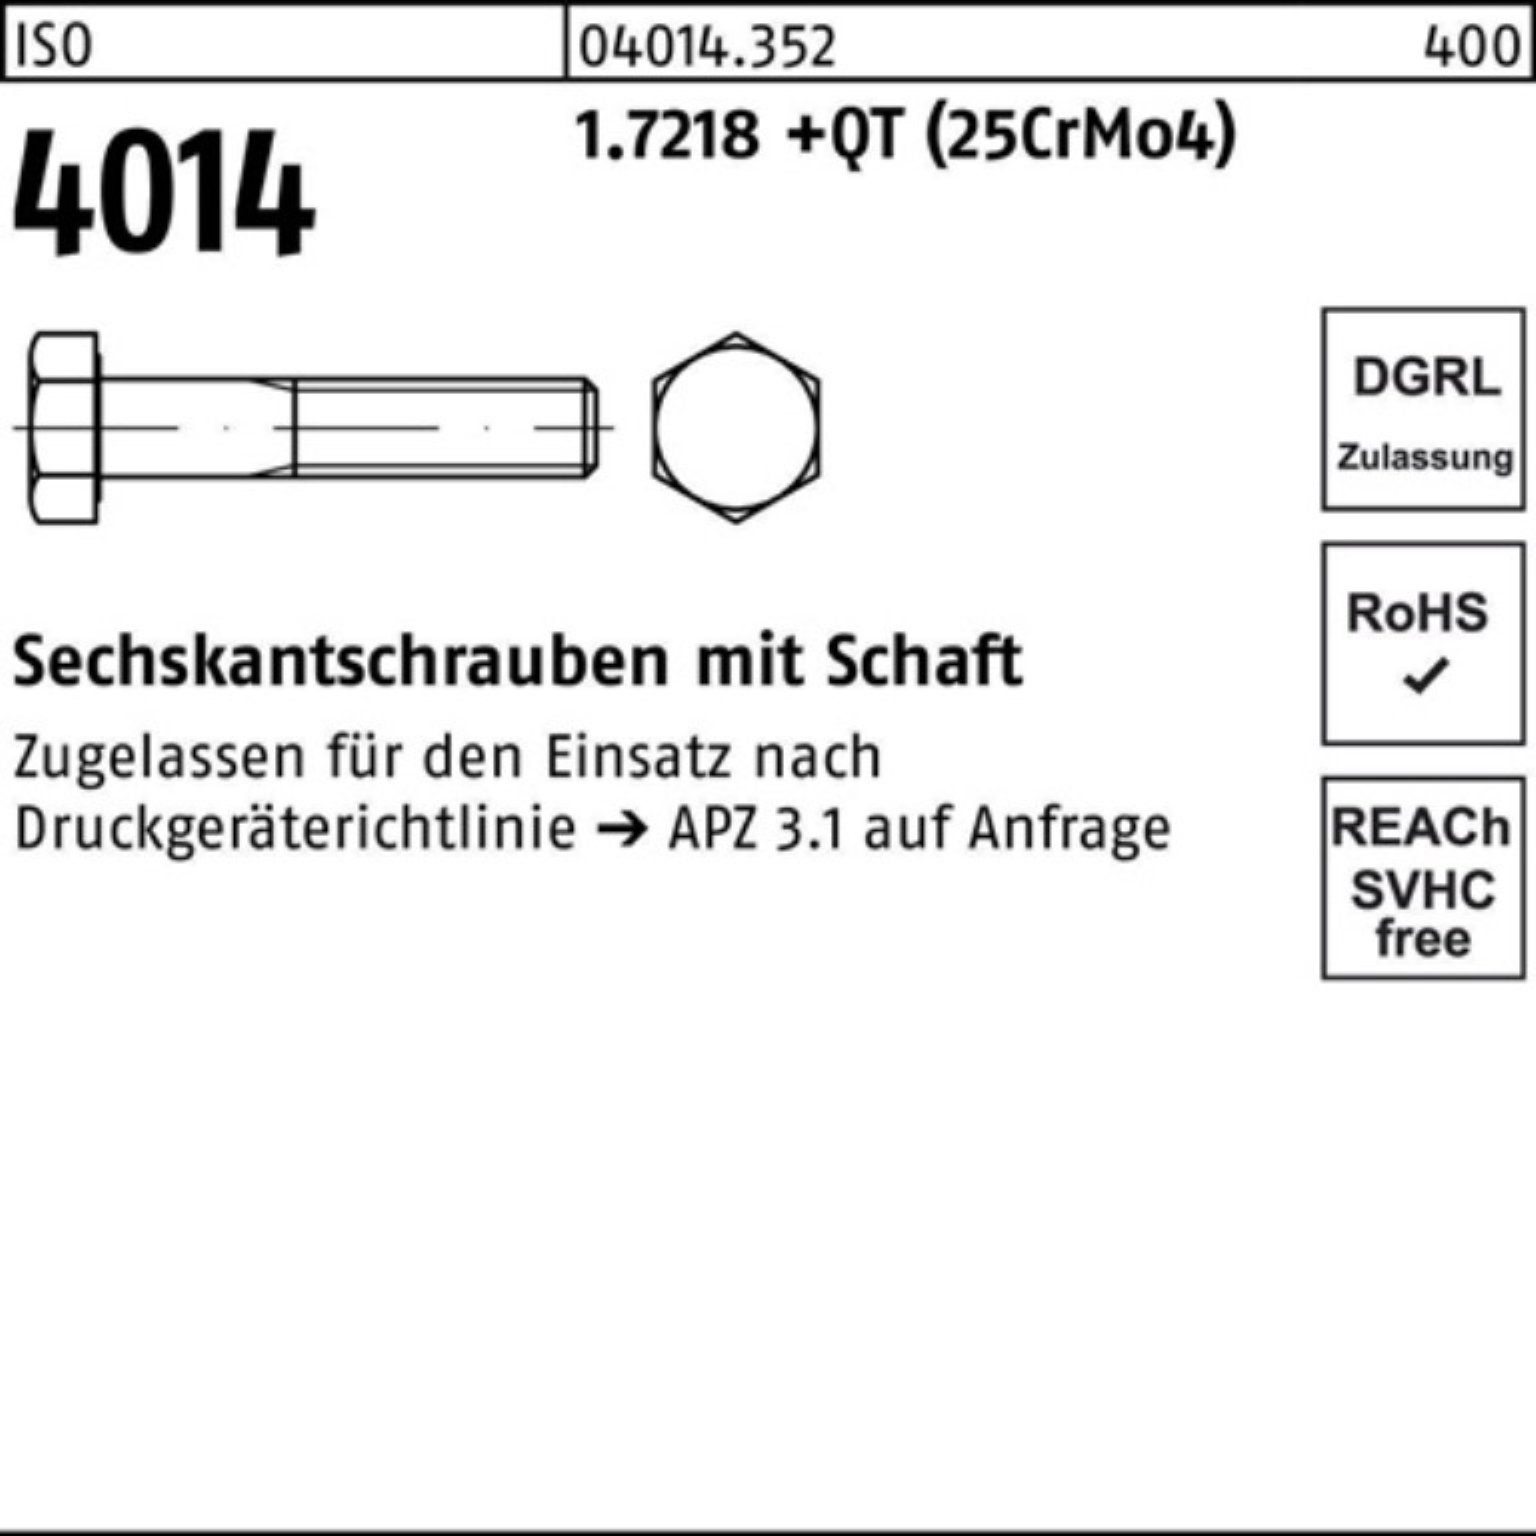 Online-Großhandelspreise Bufab Sechskantschraube 100er Pack 4014 Schaft (25Cr 1.7218 Sechskantschraube 150 ISO +QT M24x